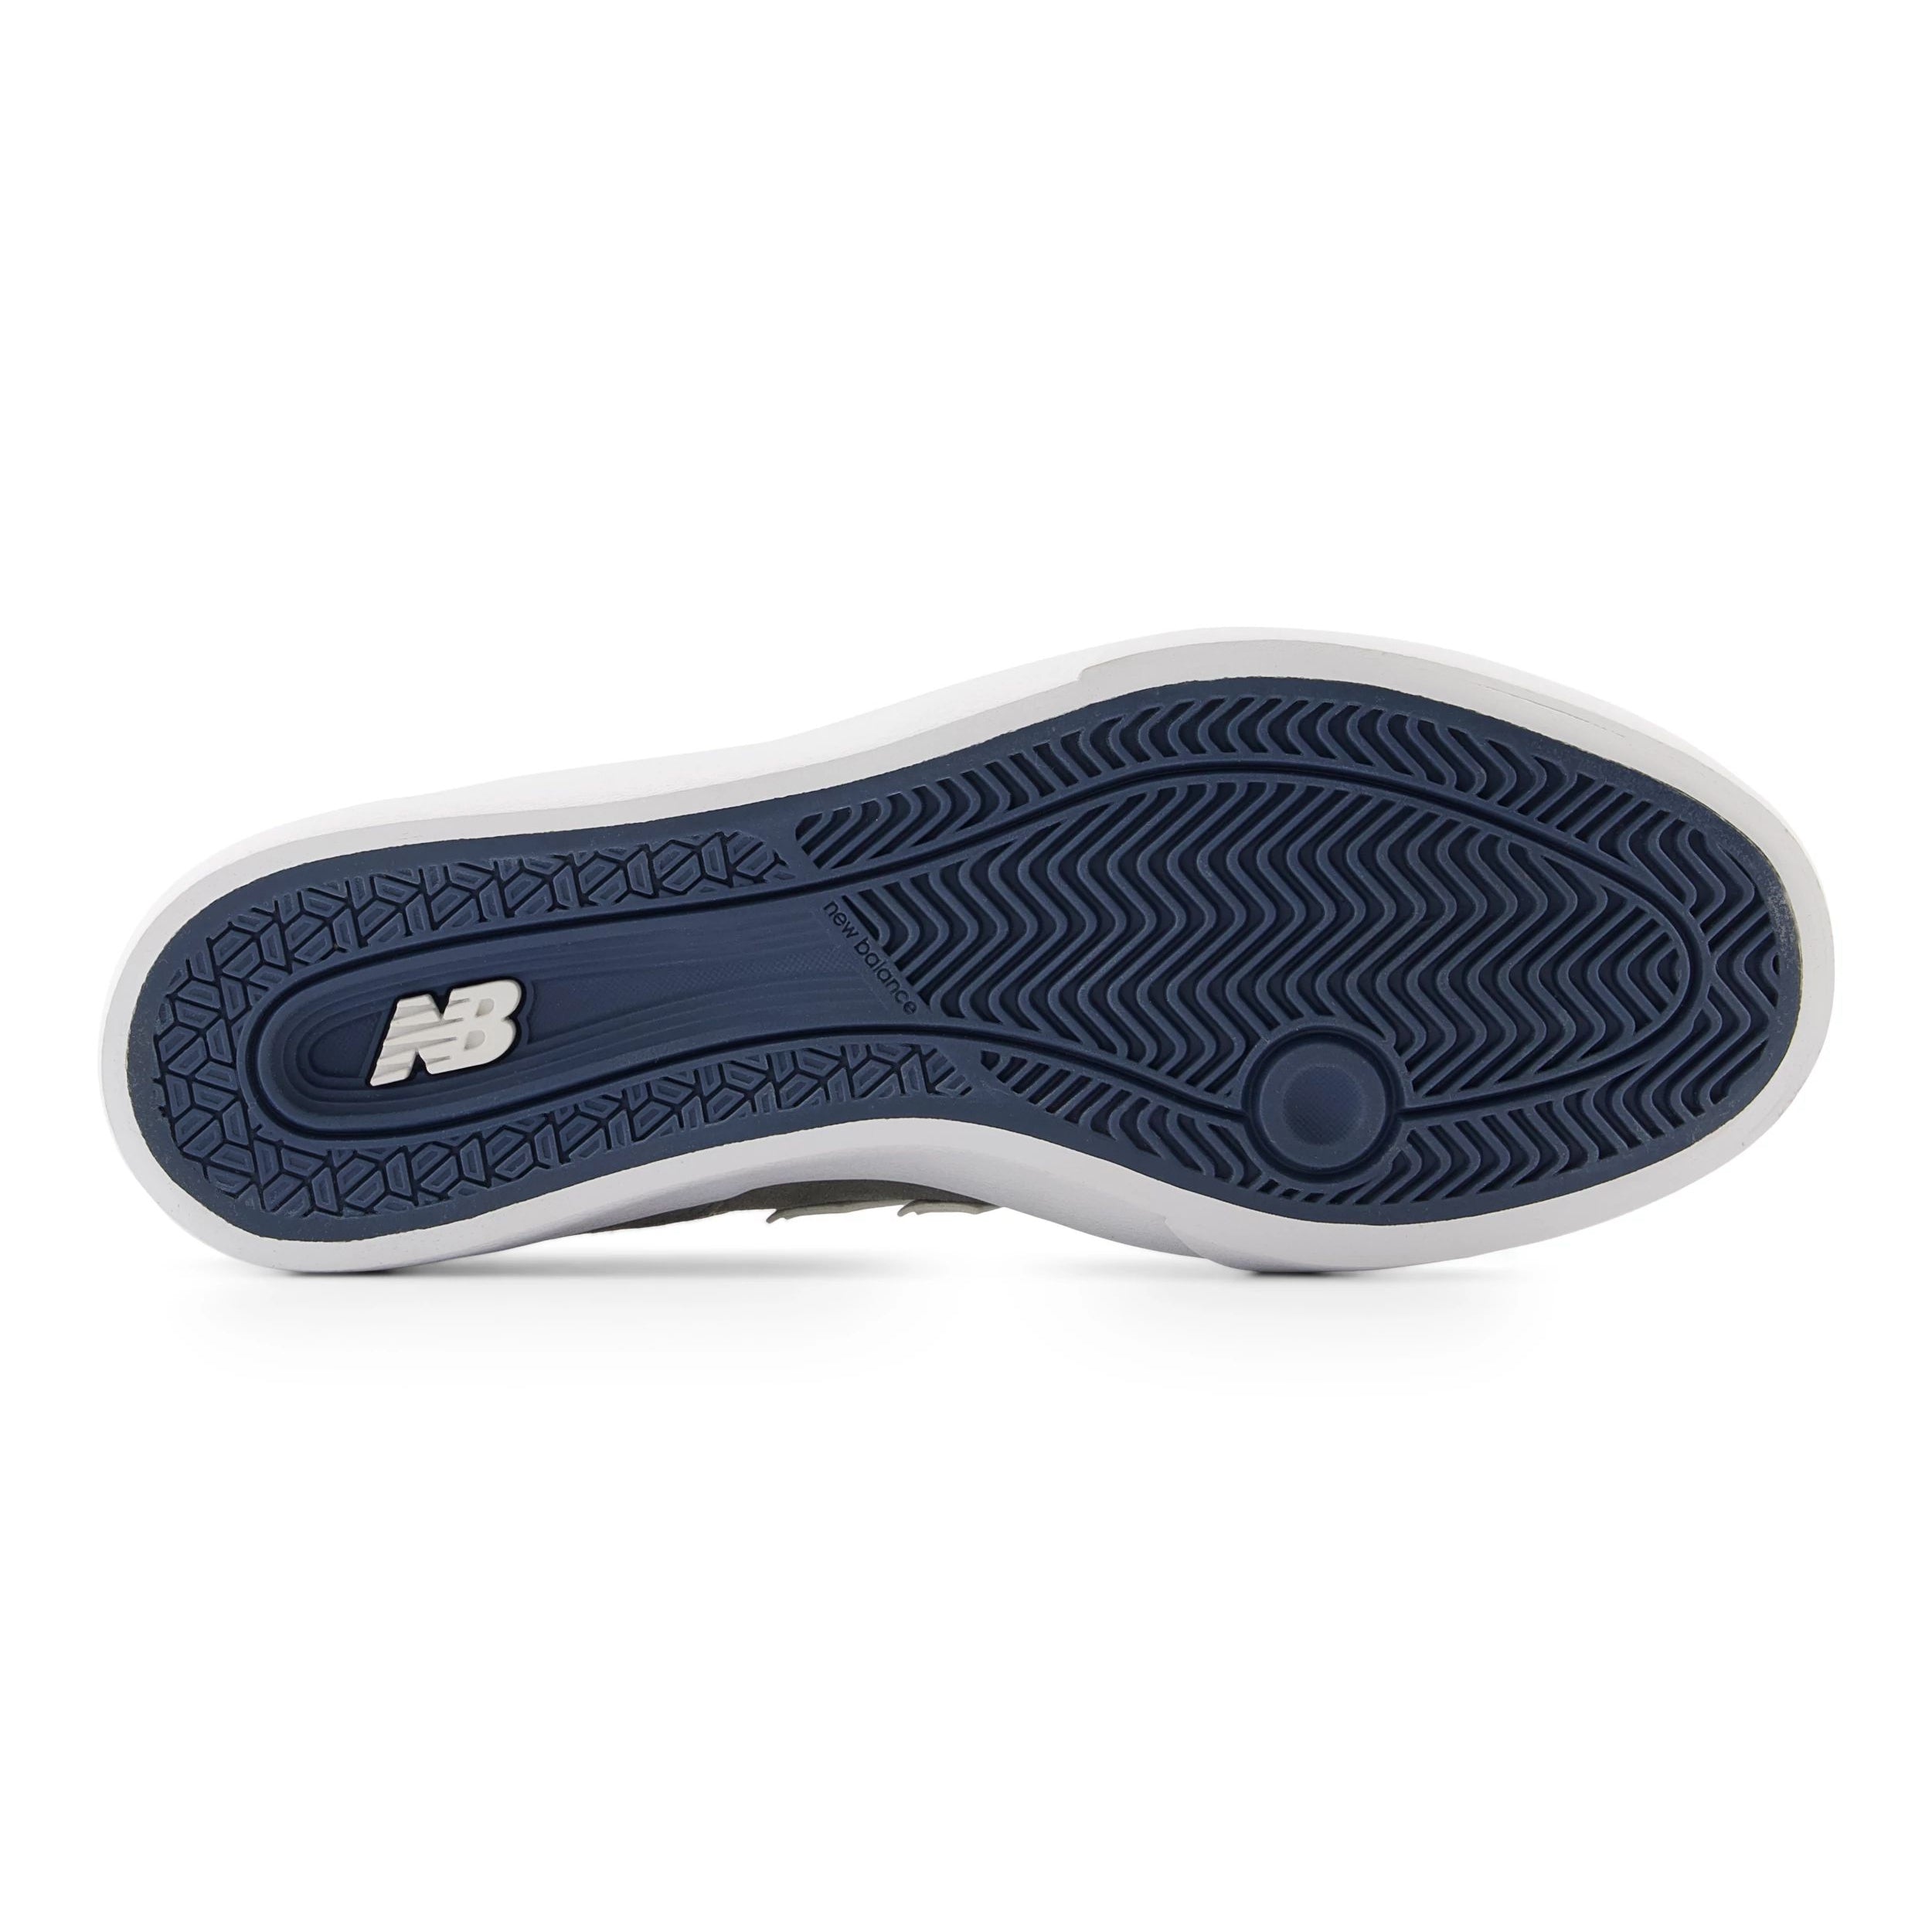 Grey/White NM574 Vulc NB Numeric Skate Shoe Bottom